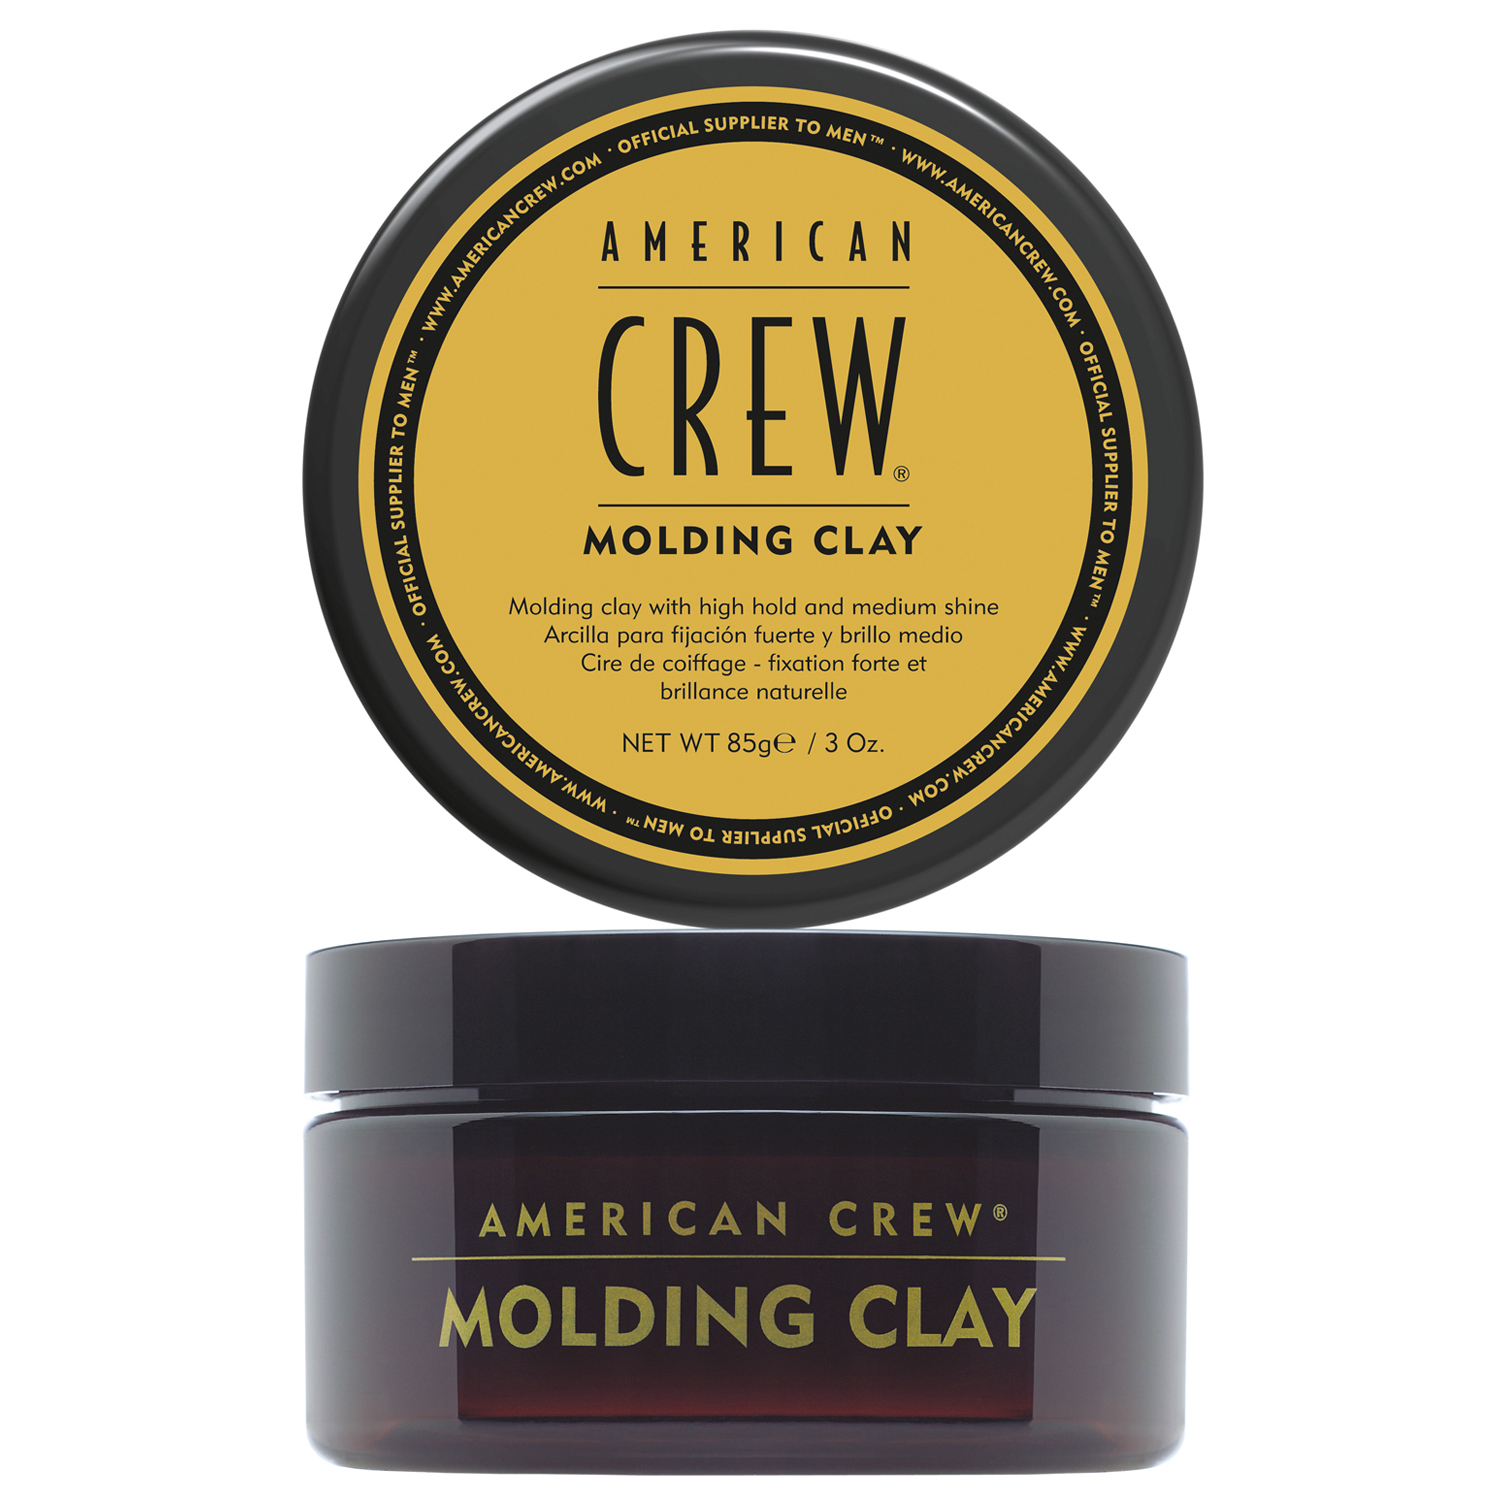 American Crew Моделирующая глина для укладки волос сильной фиксации Molding Clay, 85 г (American Crew, Styling) american crew моделирующая глина для укладки волос сильной фиксации 85 г american crew styling